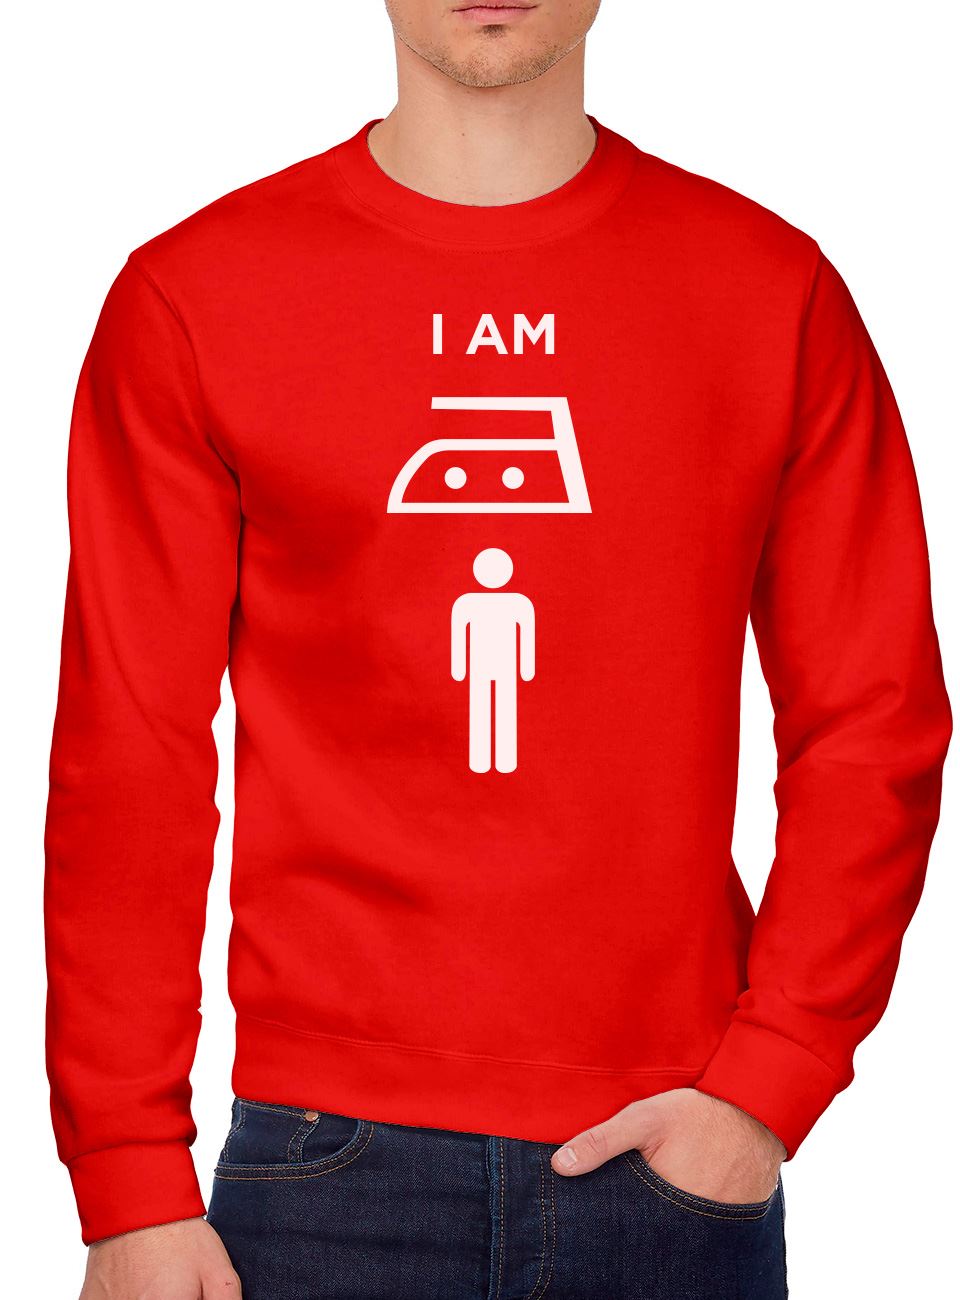 I am Iron Man - Youth & Mens Sweatshirt